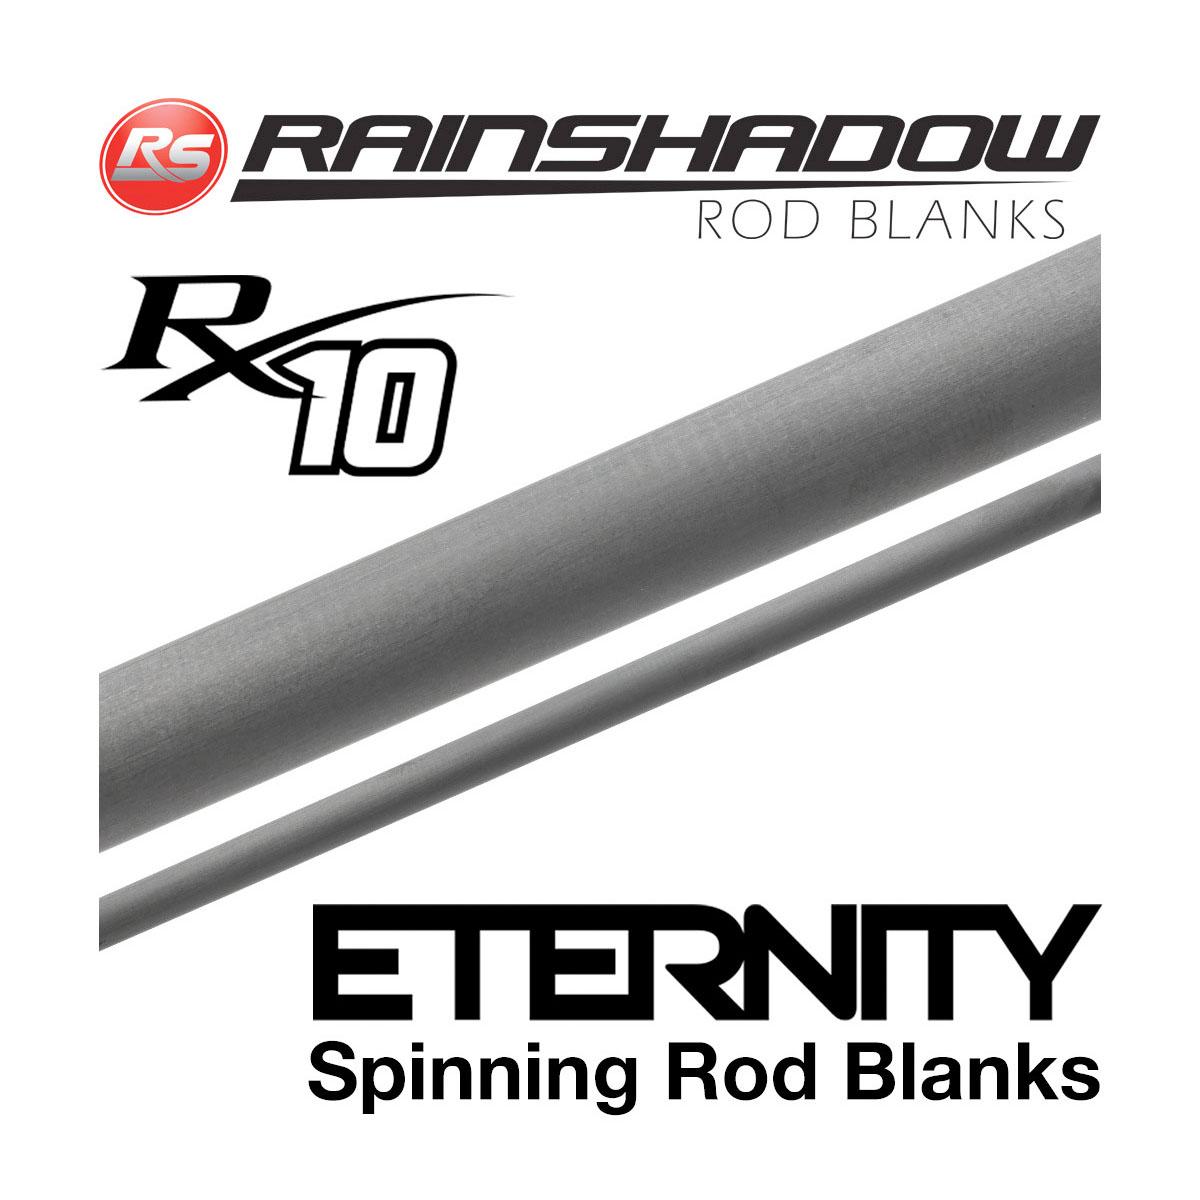 Rainshadow Eternity RX10 Spinning Rod Blanks